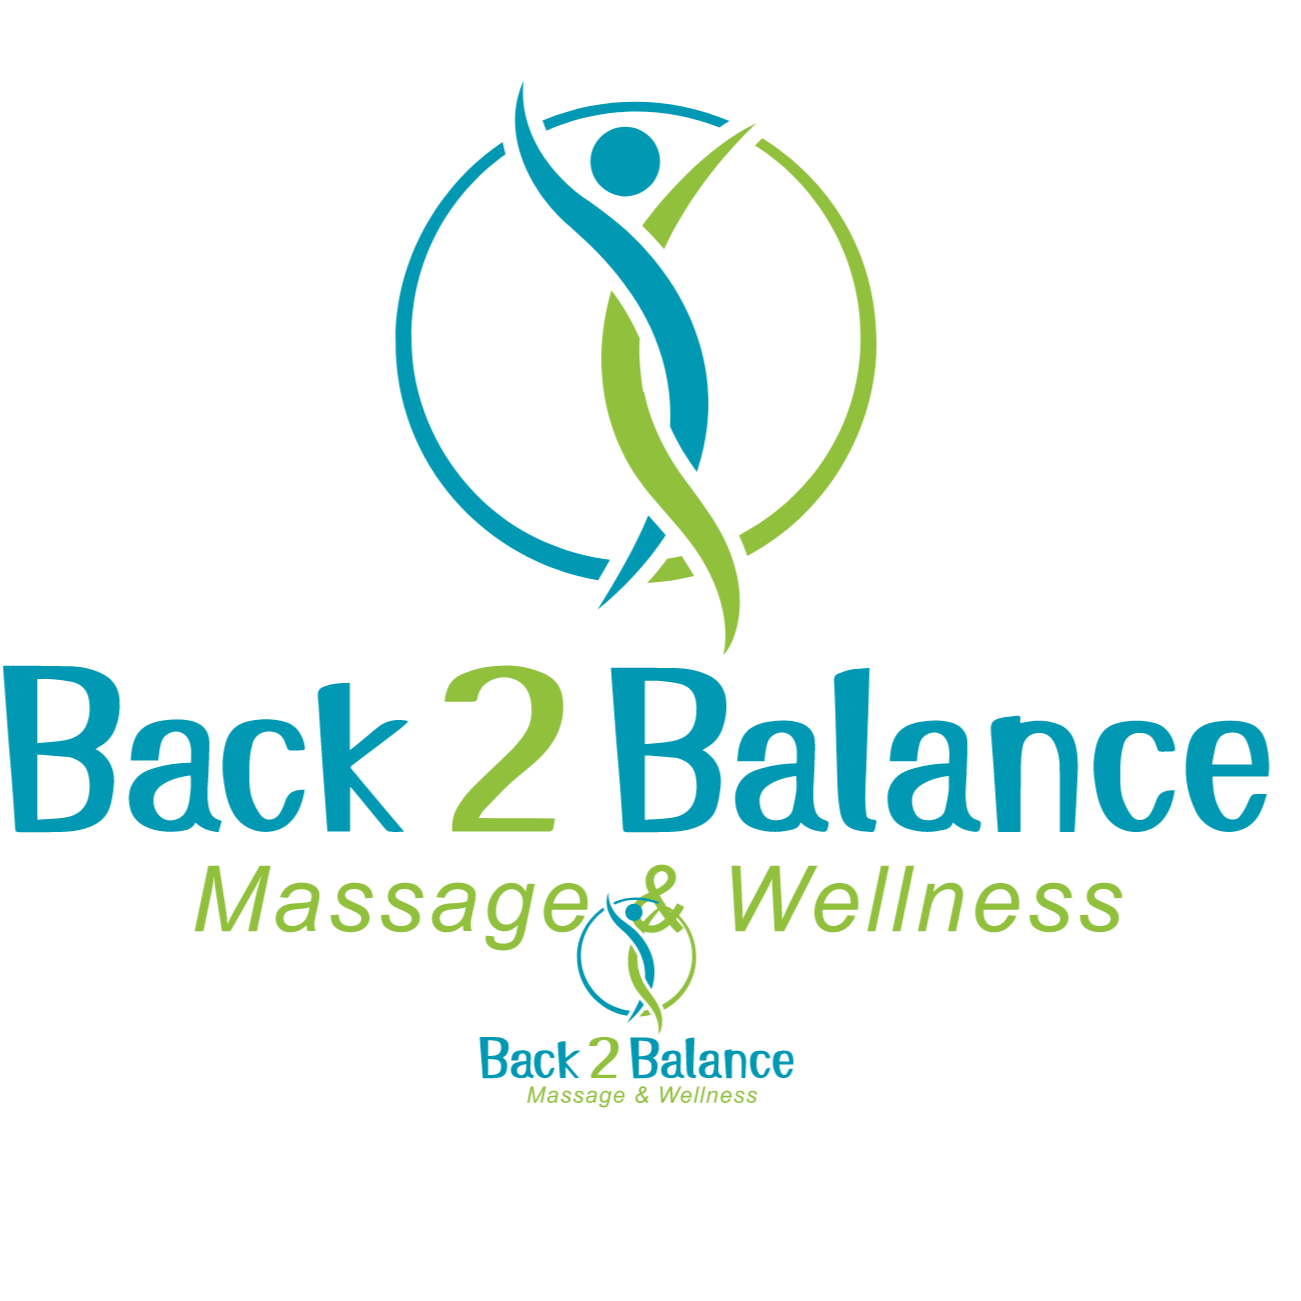 Back 2 Balance Massage & Wellness - Port Orange, FL 32127 - (386)898-4967 | ShowMeLocal.com